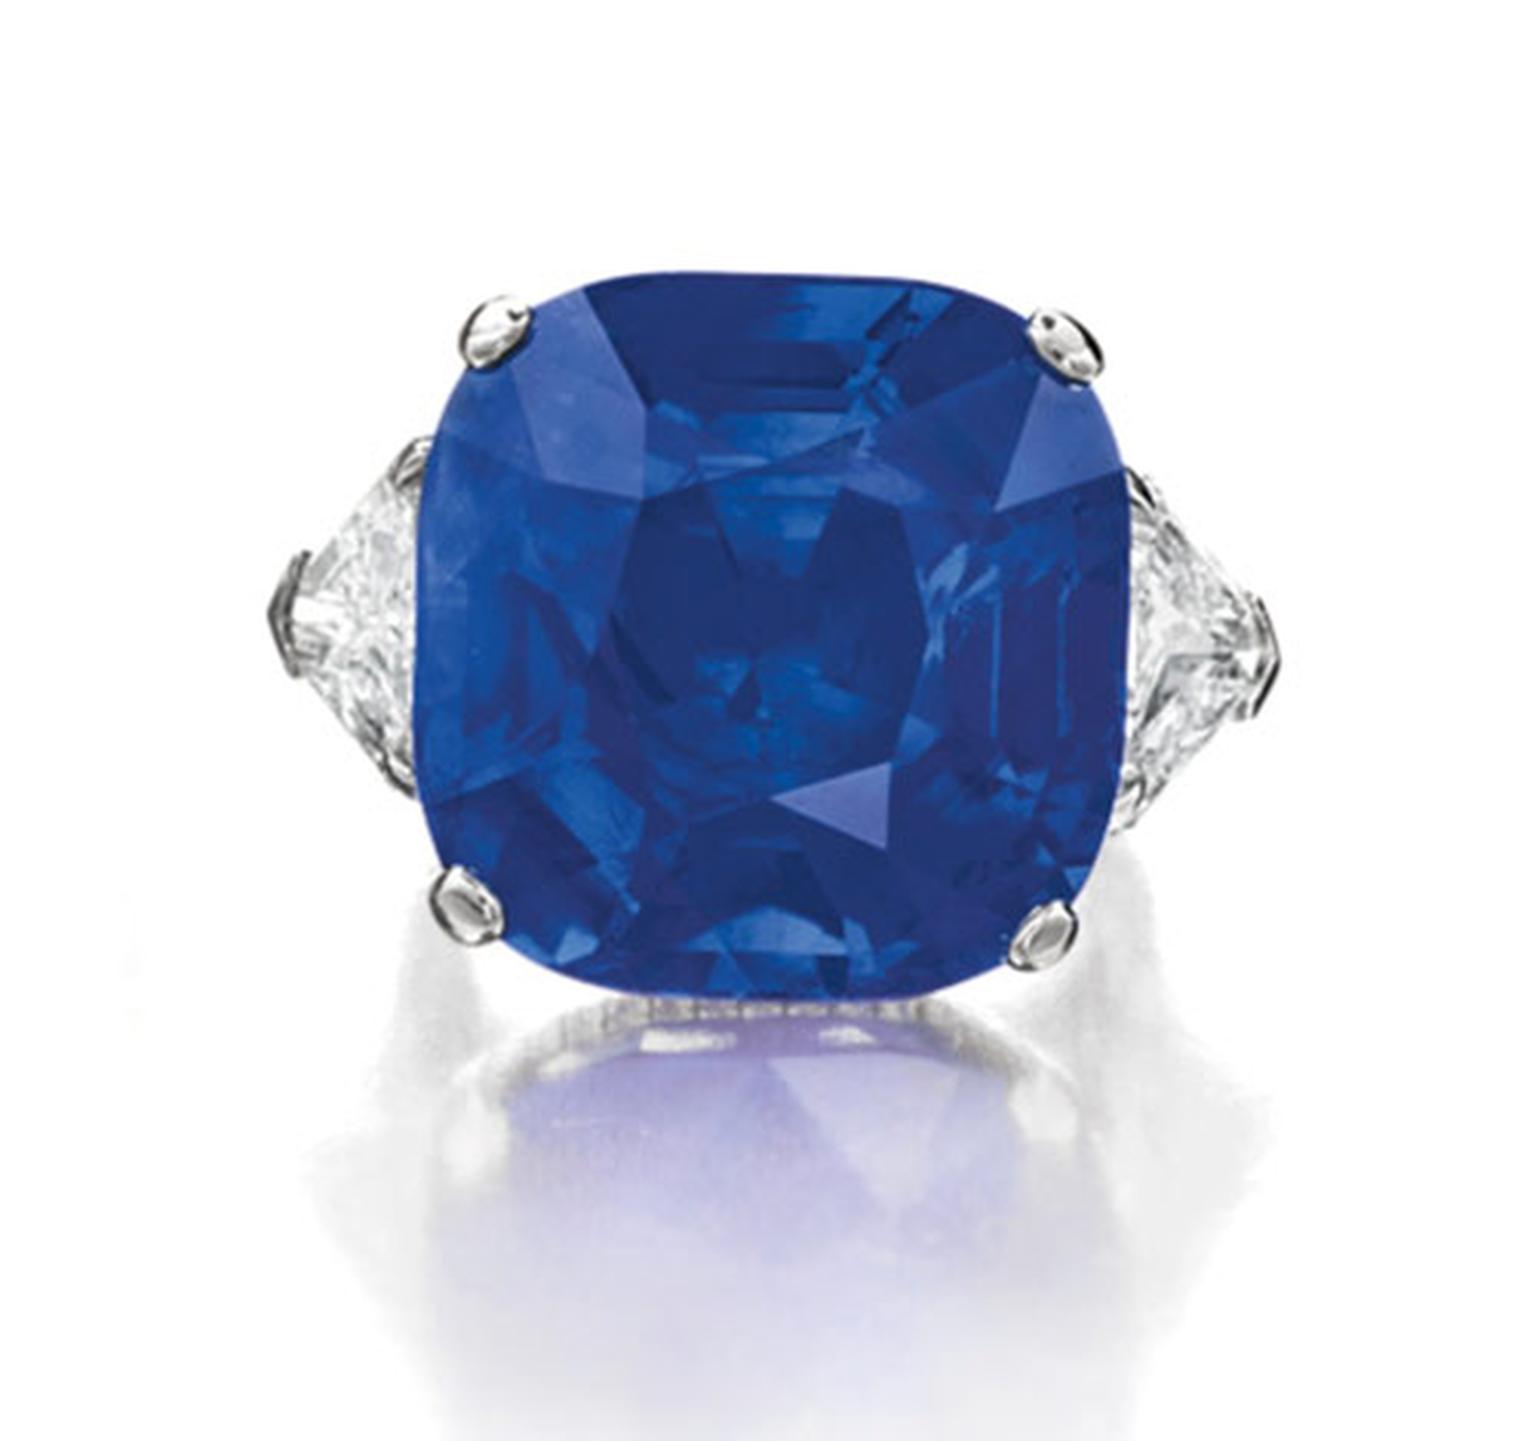 Christies-Cushion-Cut-Burmese-Sapphire-Diamond-Ring.jpg